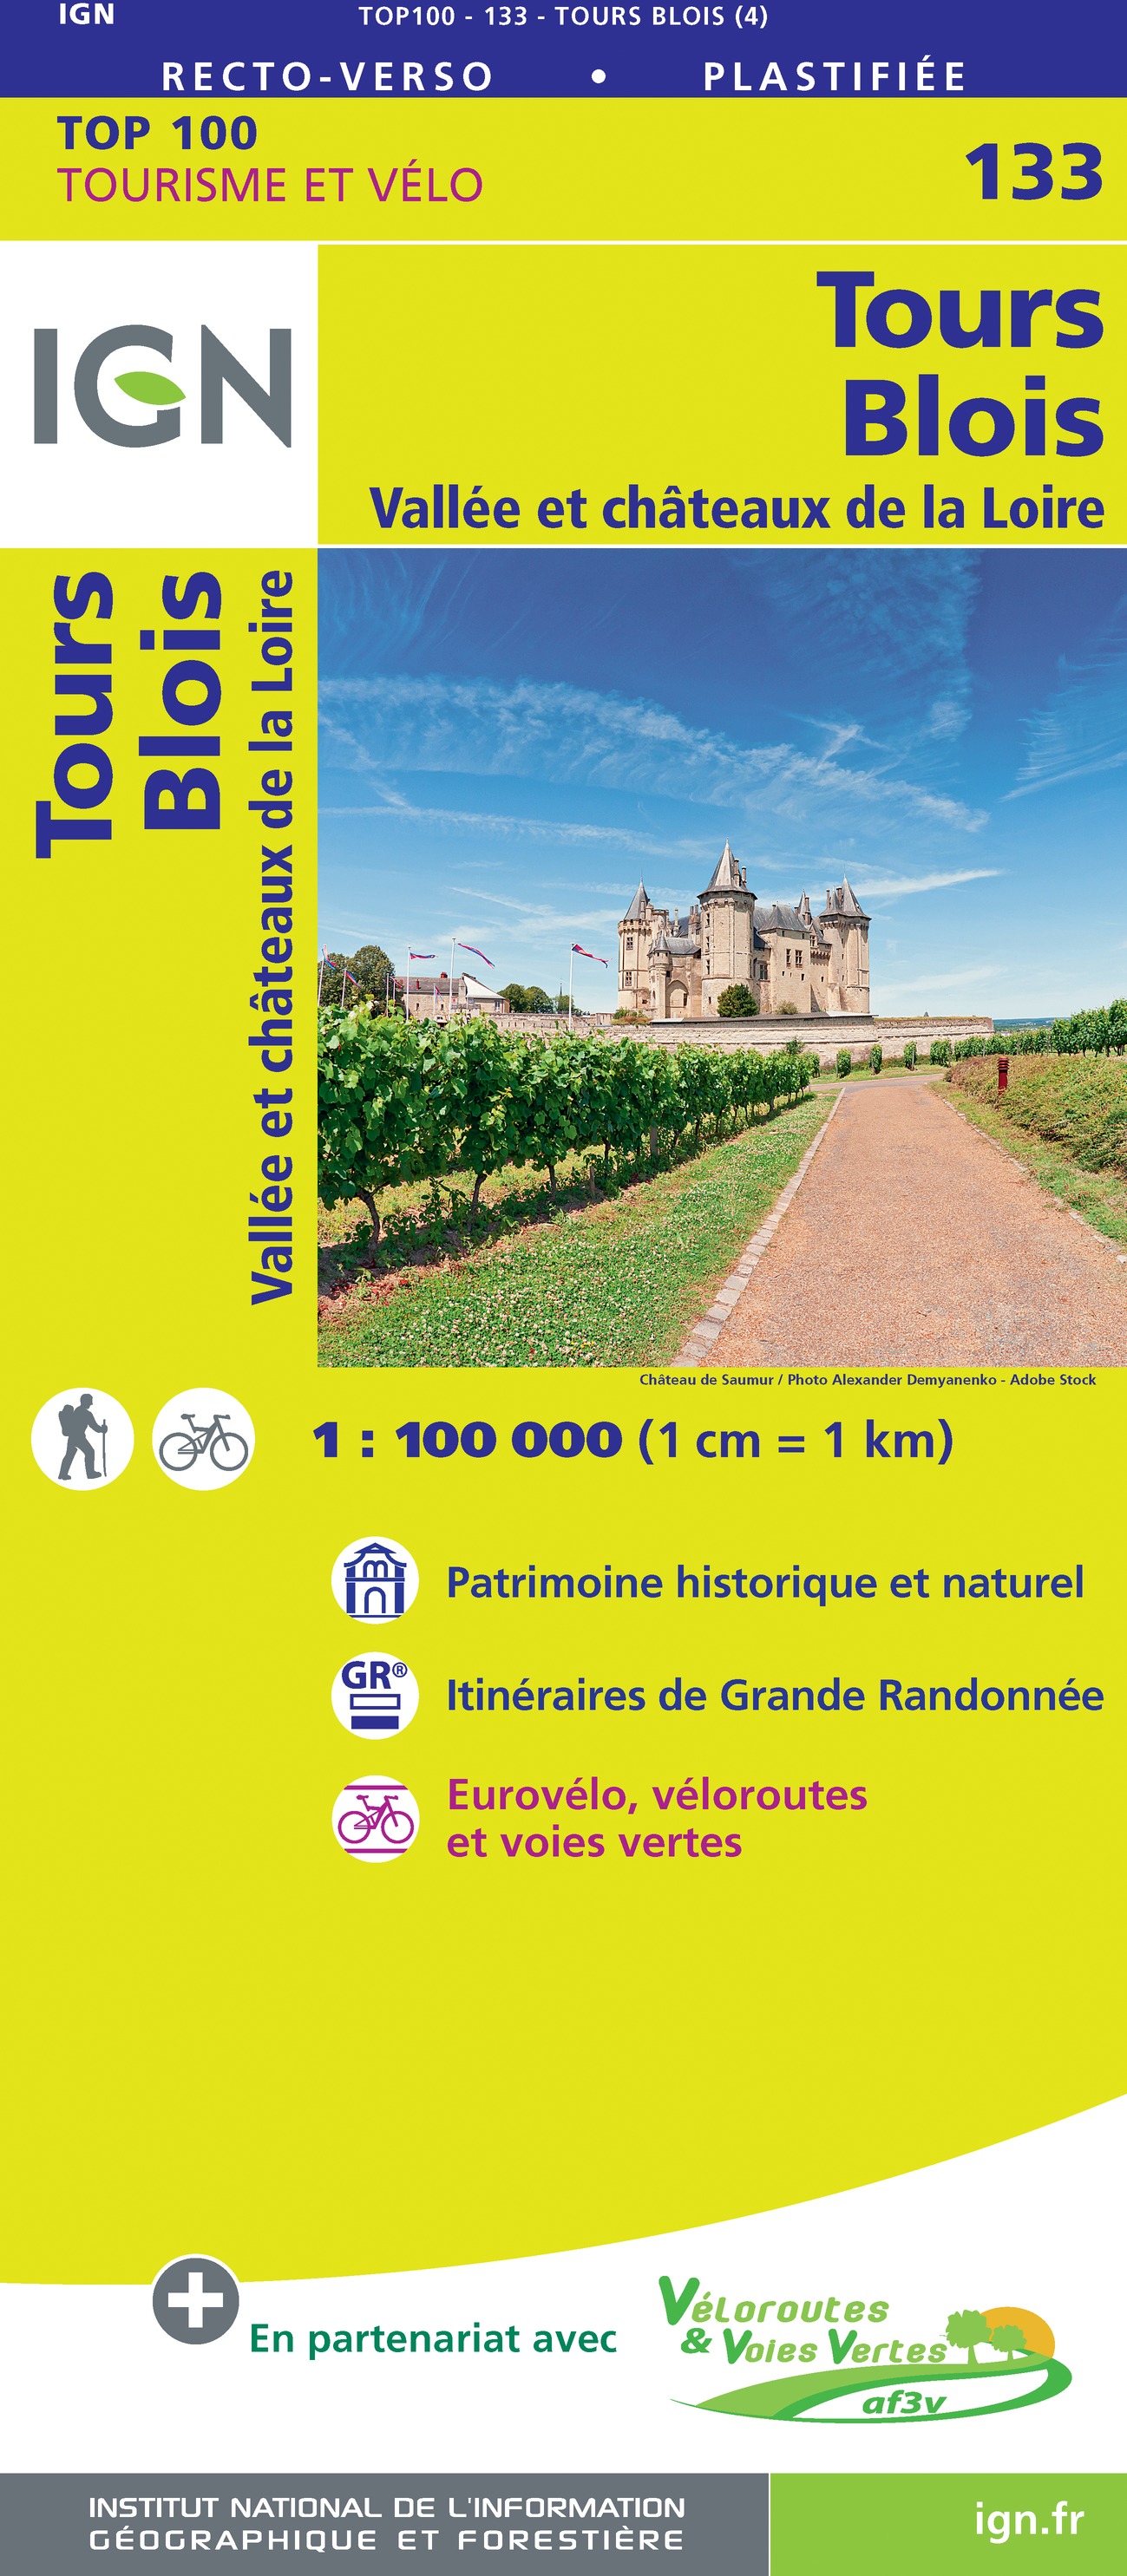 Online bestellen: Fietskaart - Wegenkaart - landkaart 133 Tours - Blois | IGN - Institut Géographique National